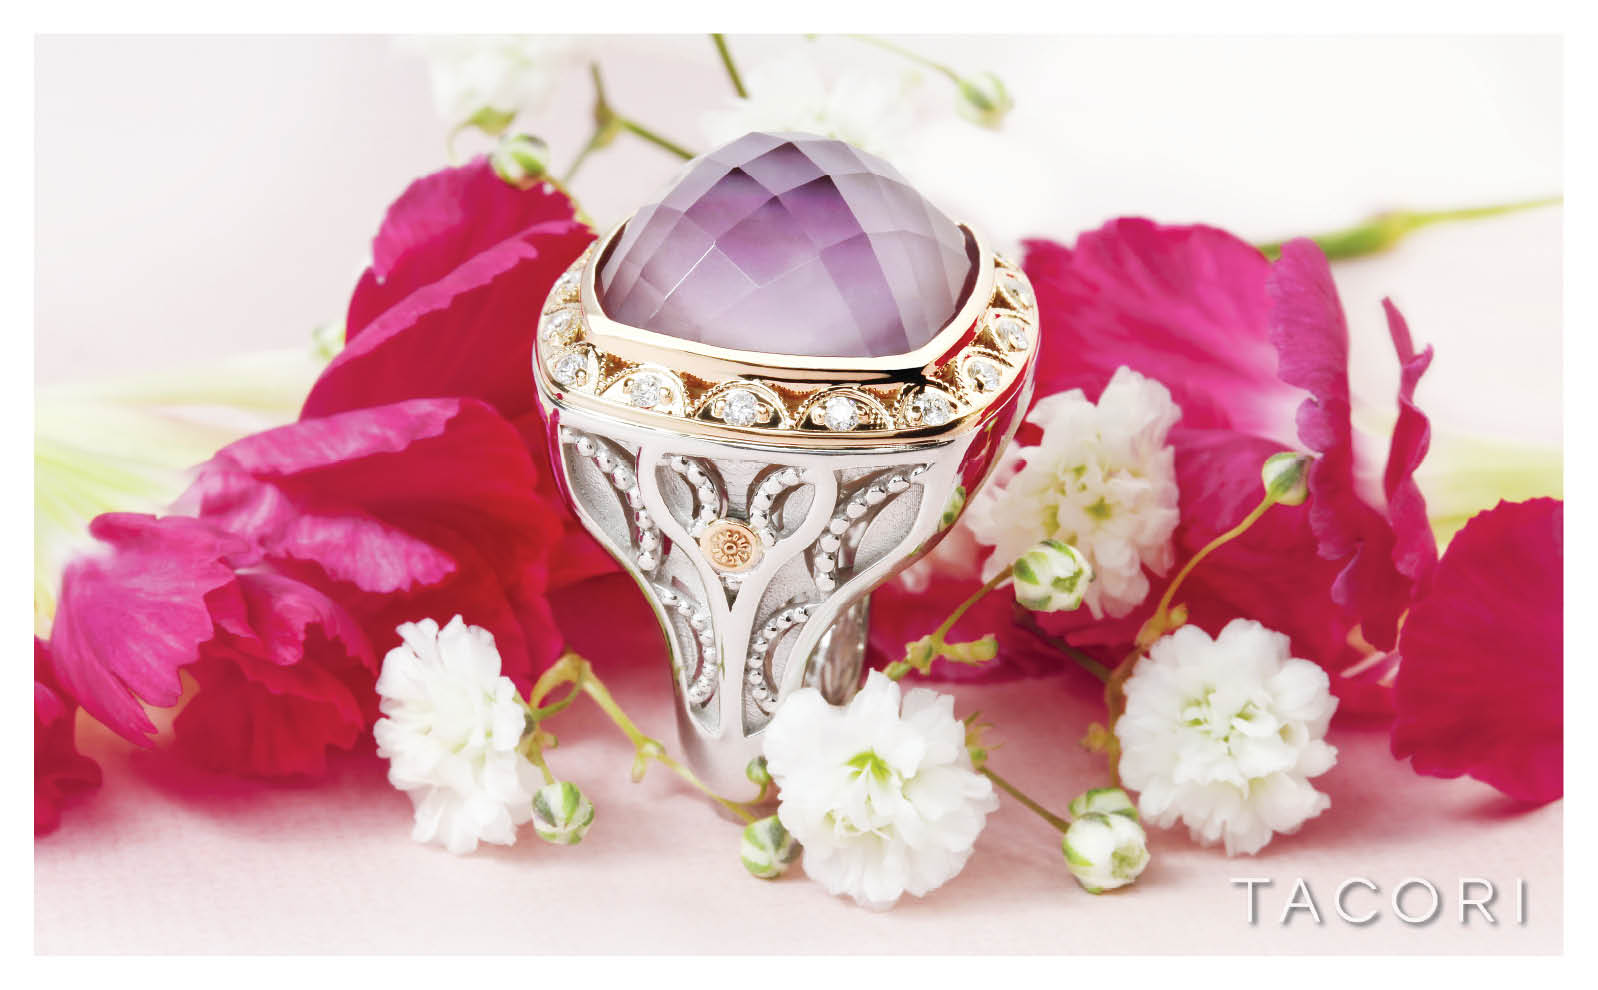 Tacori Jewelry 2015 Jewelry Calendar Whiteflash